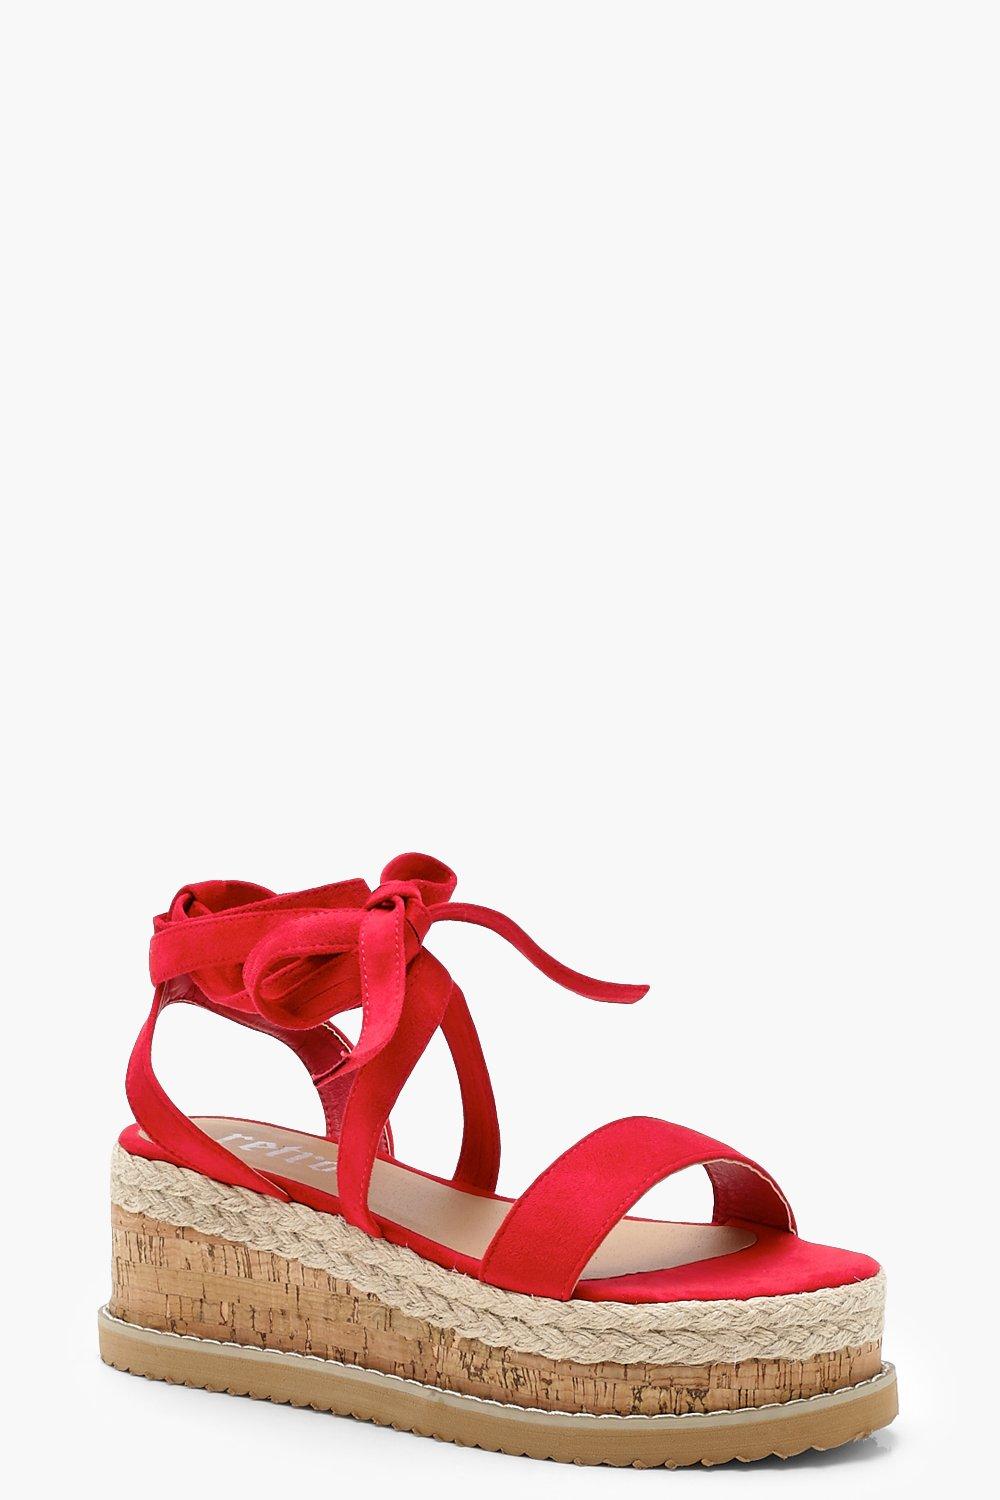 red tie up sandals